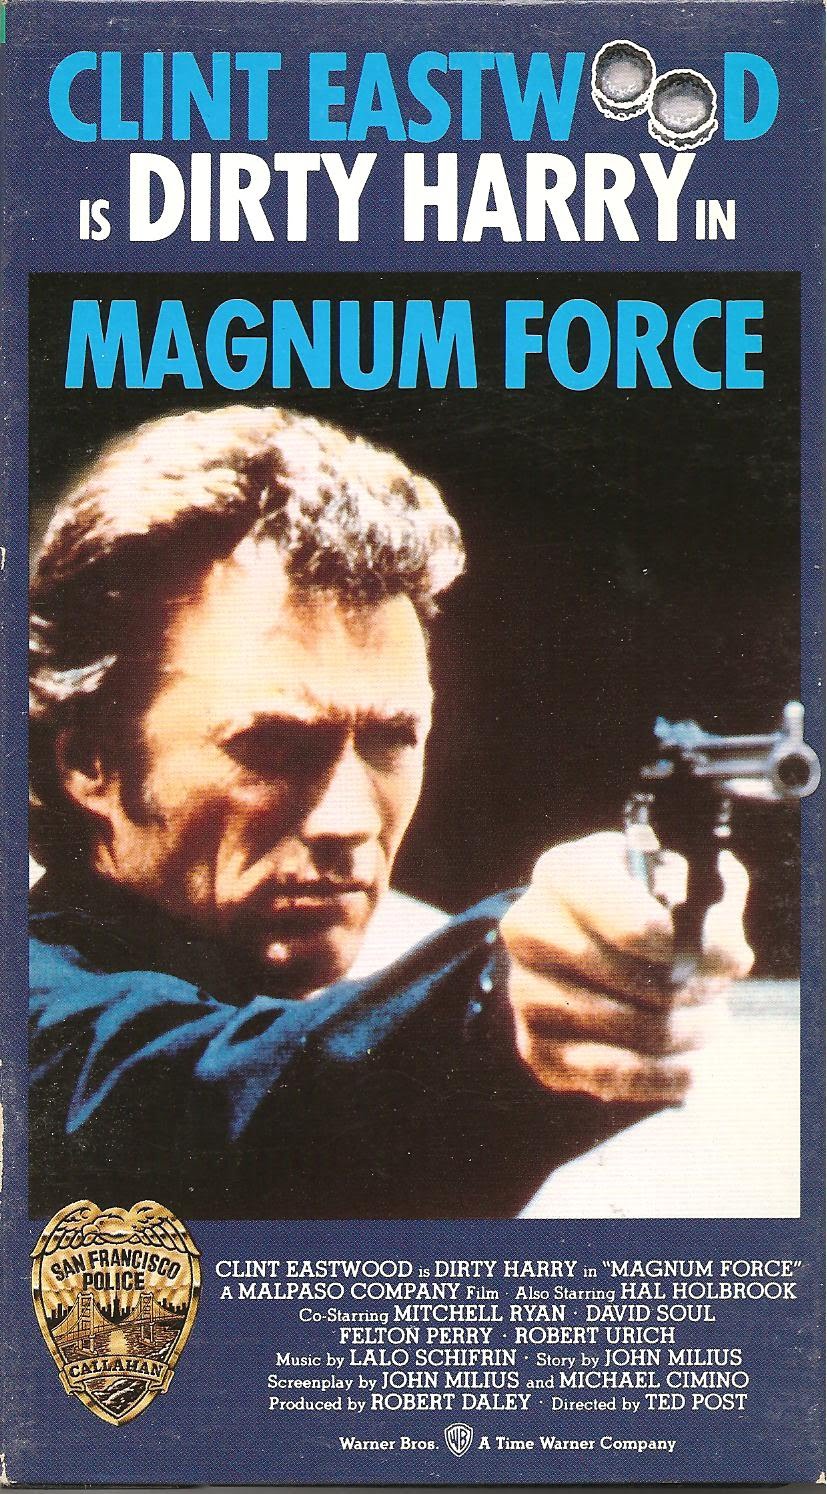 Magnum Force HD wallpapers, Desktop wallpaper - most viewed